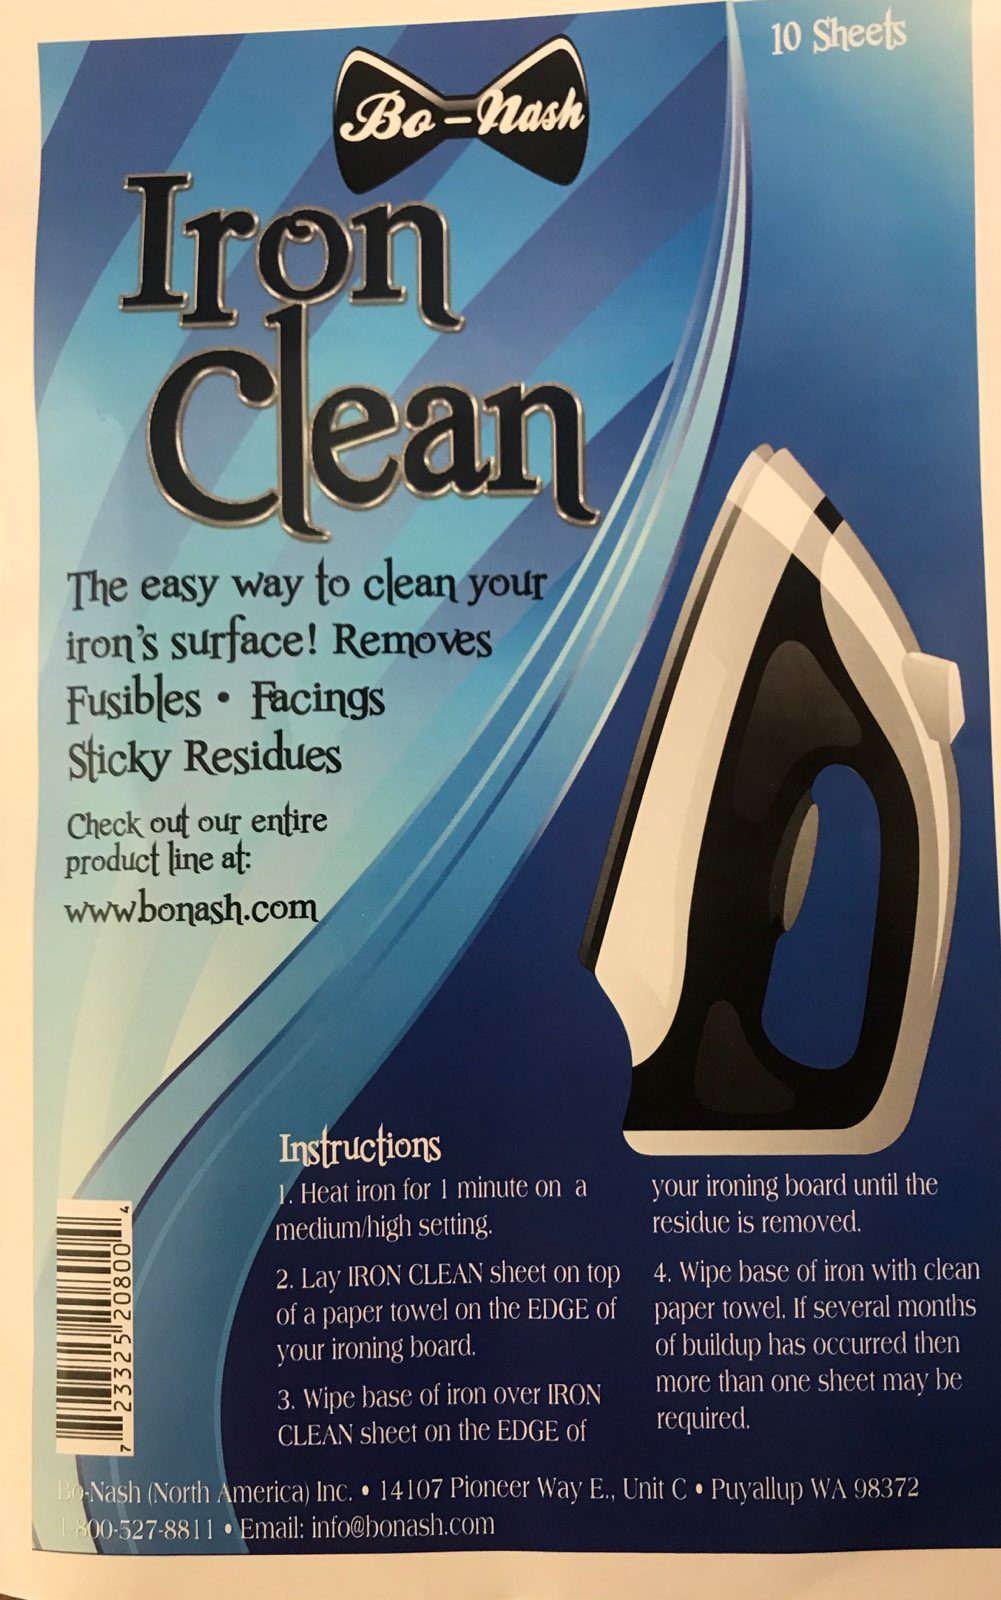 Bo Nash Iron clean - 10 Sheets